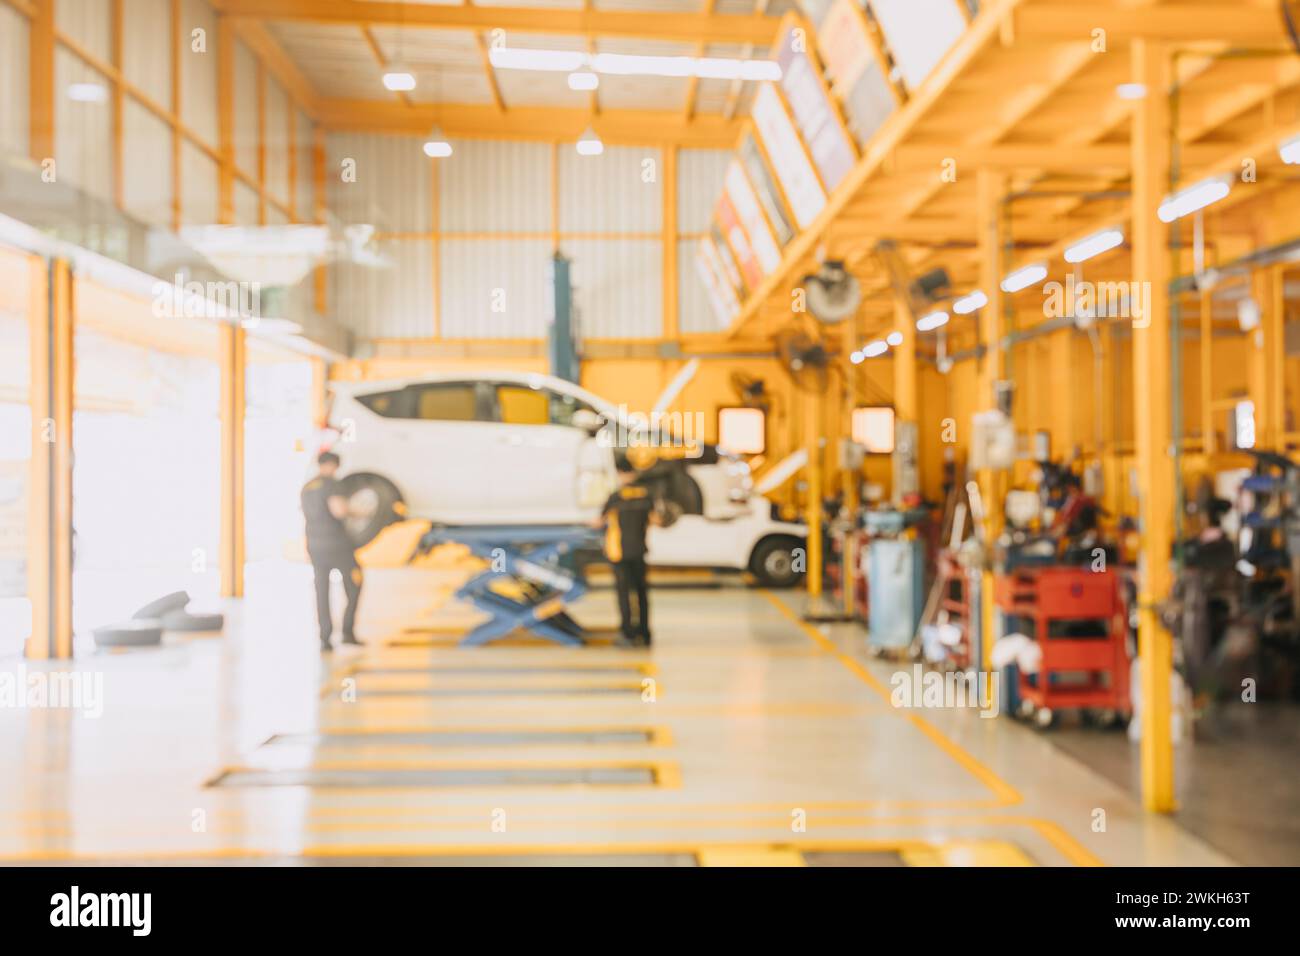 Garage car service center mechanic team worker working fix maintenance vehicle blur for background Stock Photo